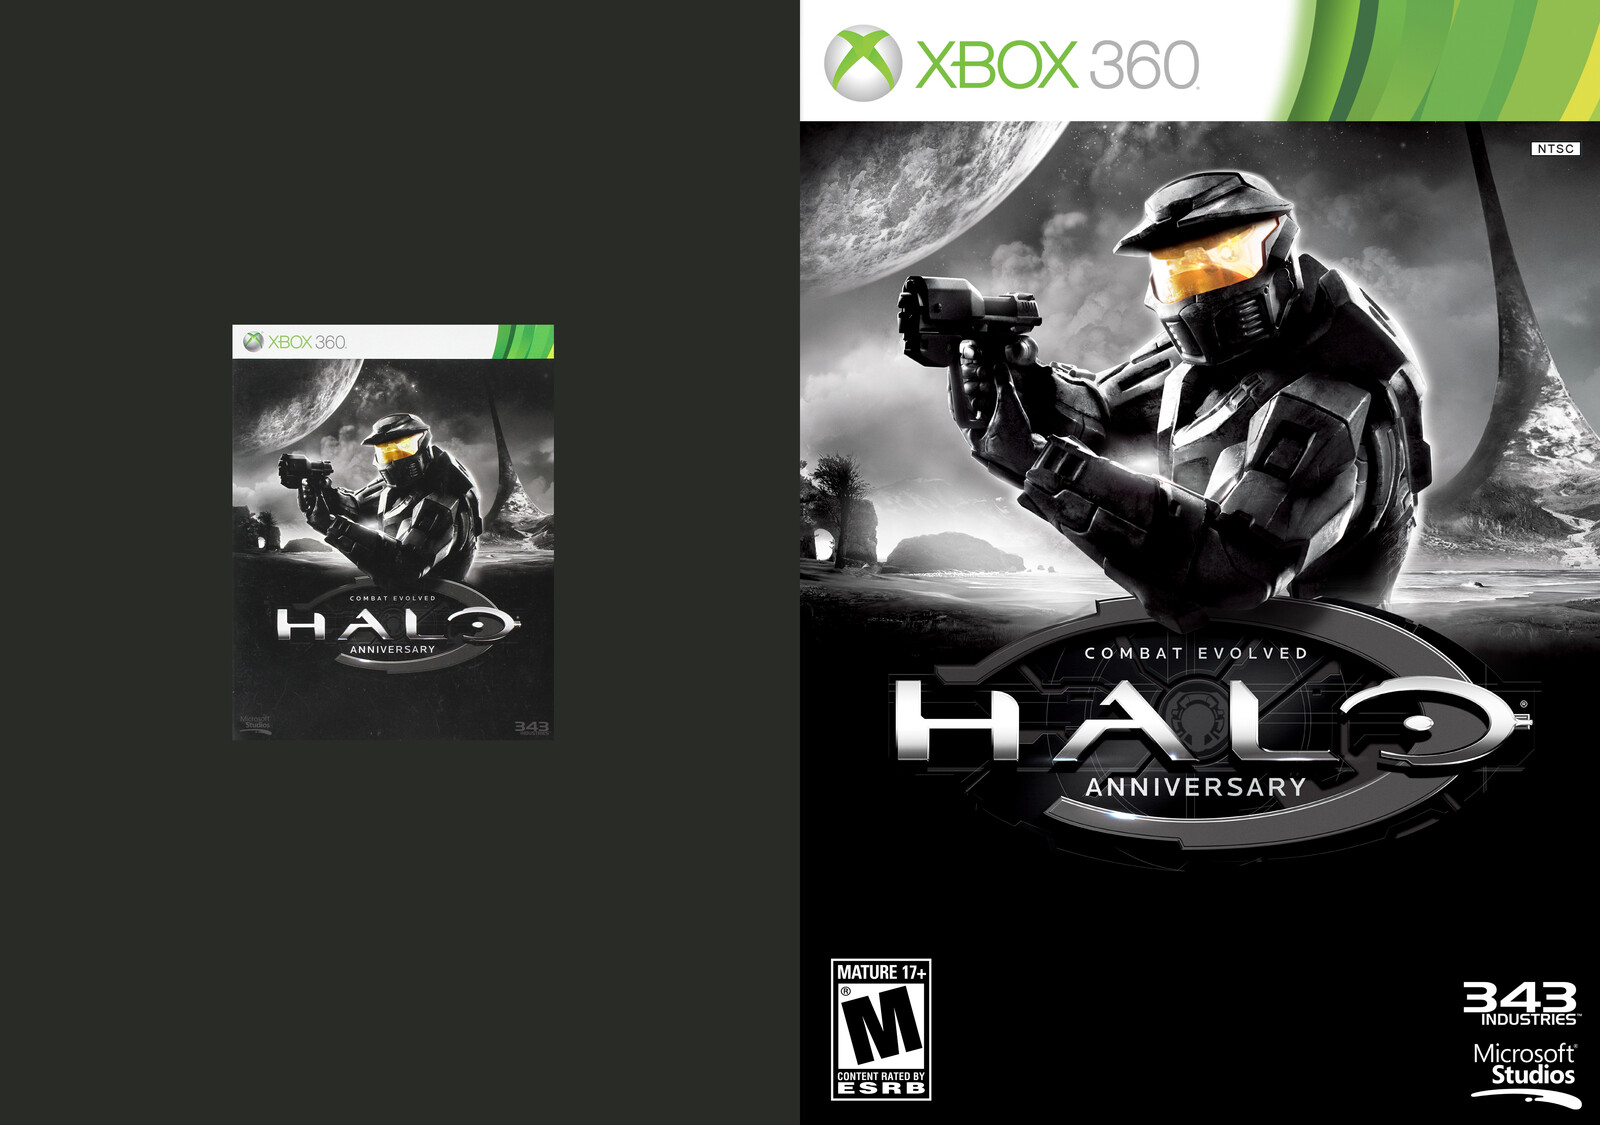 Halo Combat Evolved Anniversary (original scan cover vs. upscaled)